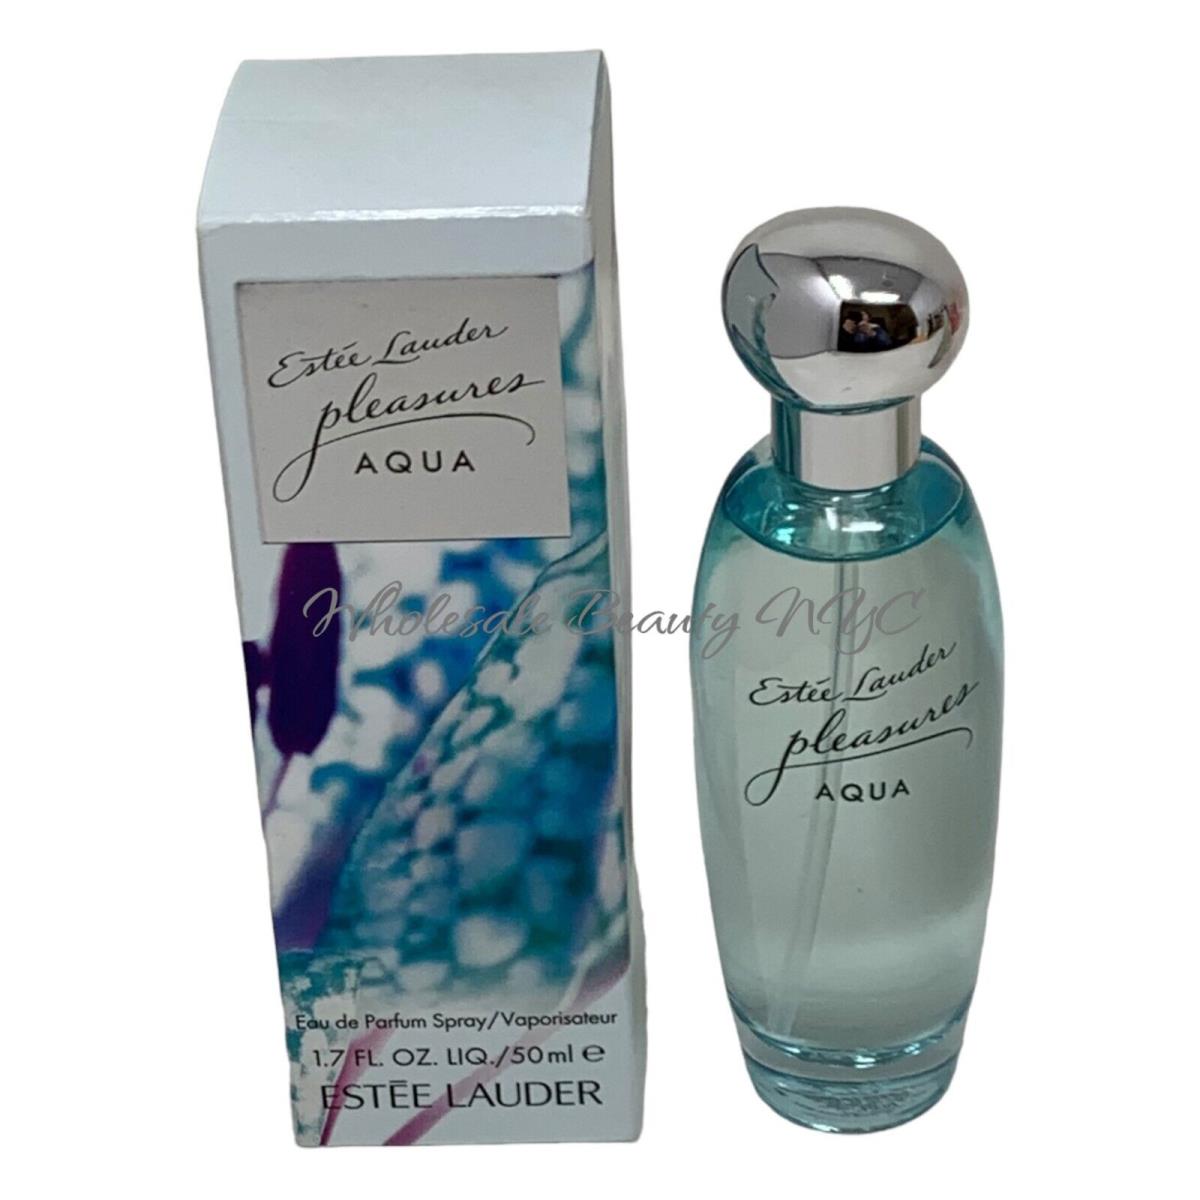 Estee Lauder Pleasures Aqua Eau de Parfum Spray For Women 1.7 OZ/50 ml